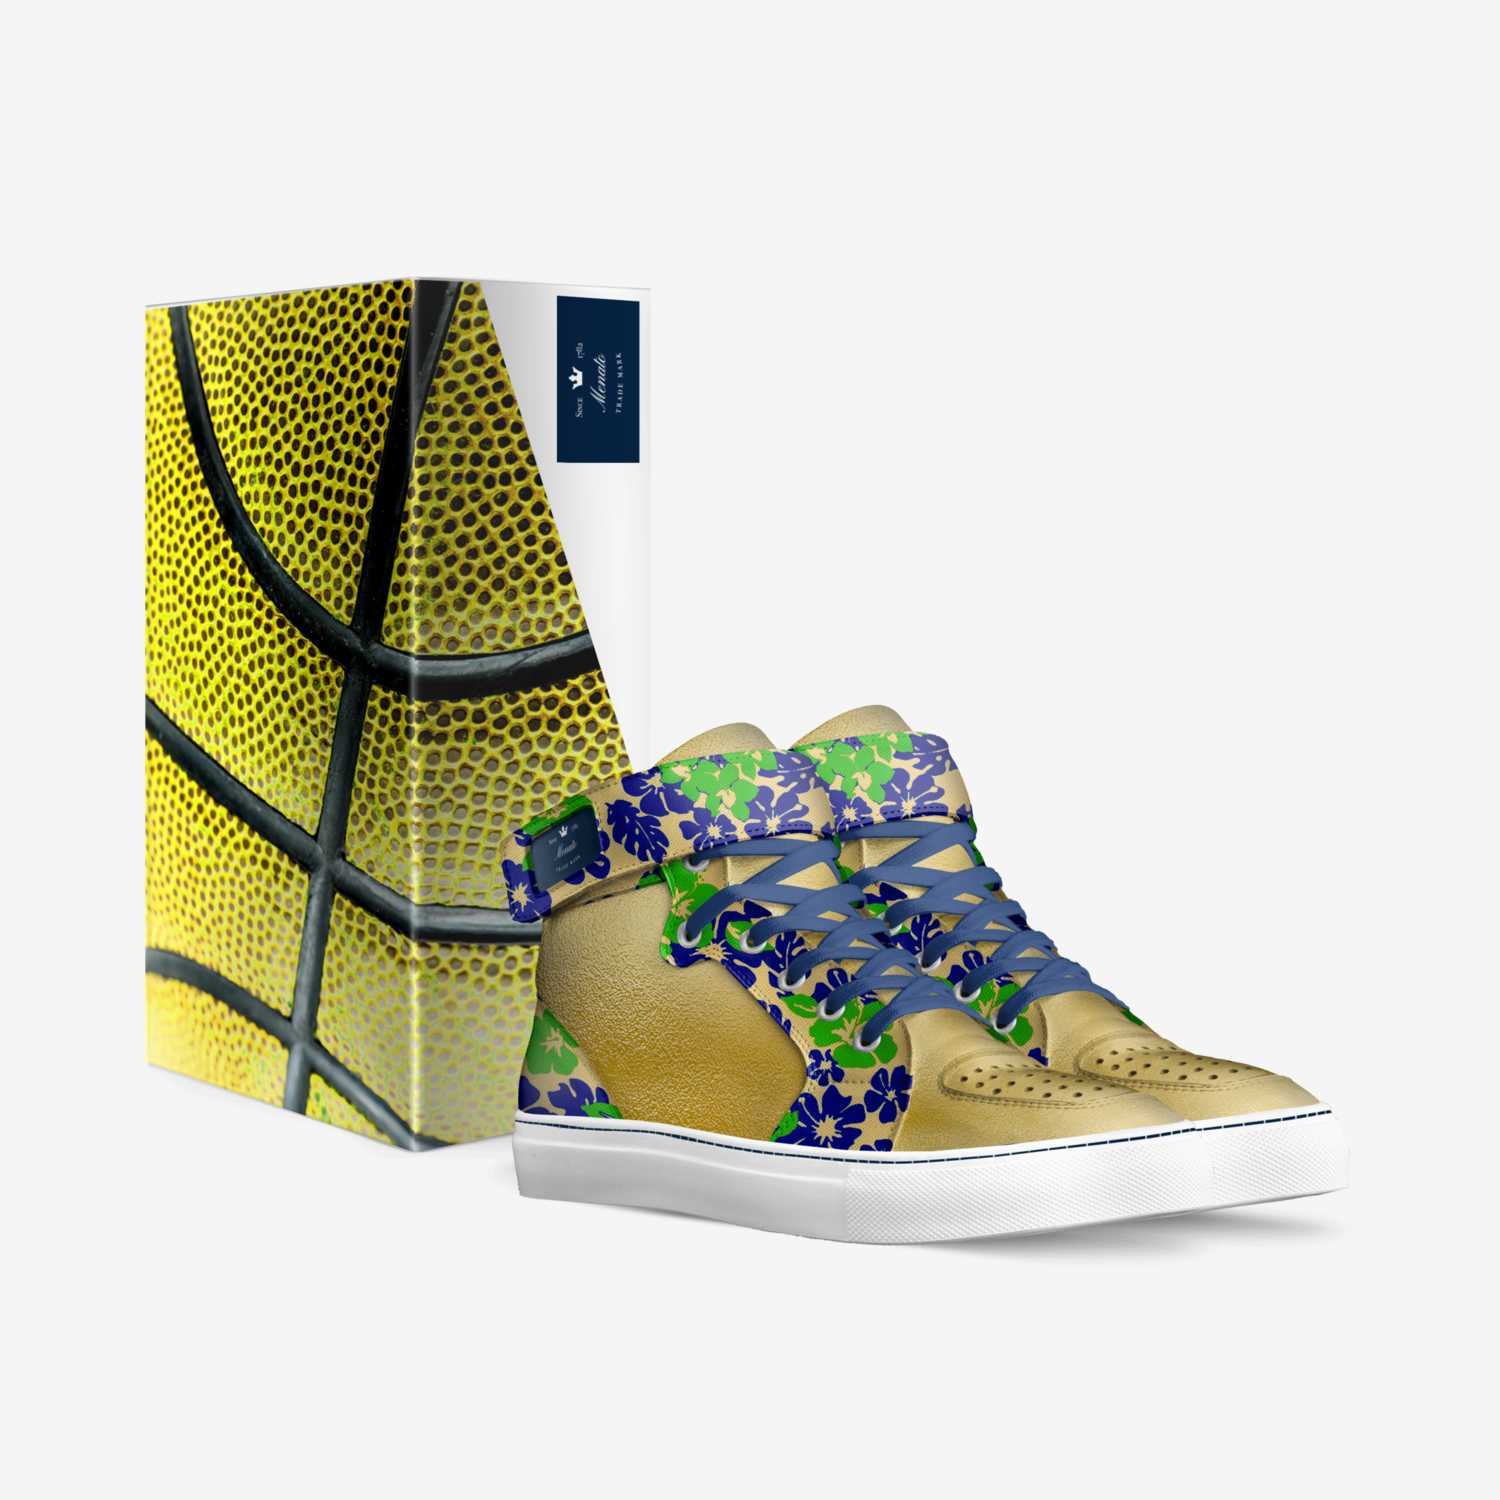 Menato custom made in Italy shoes by Alessandro Menato | Box view